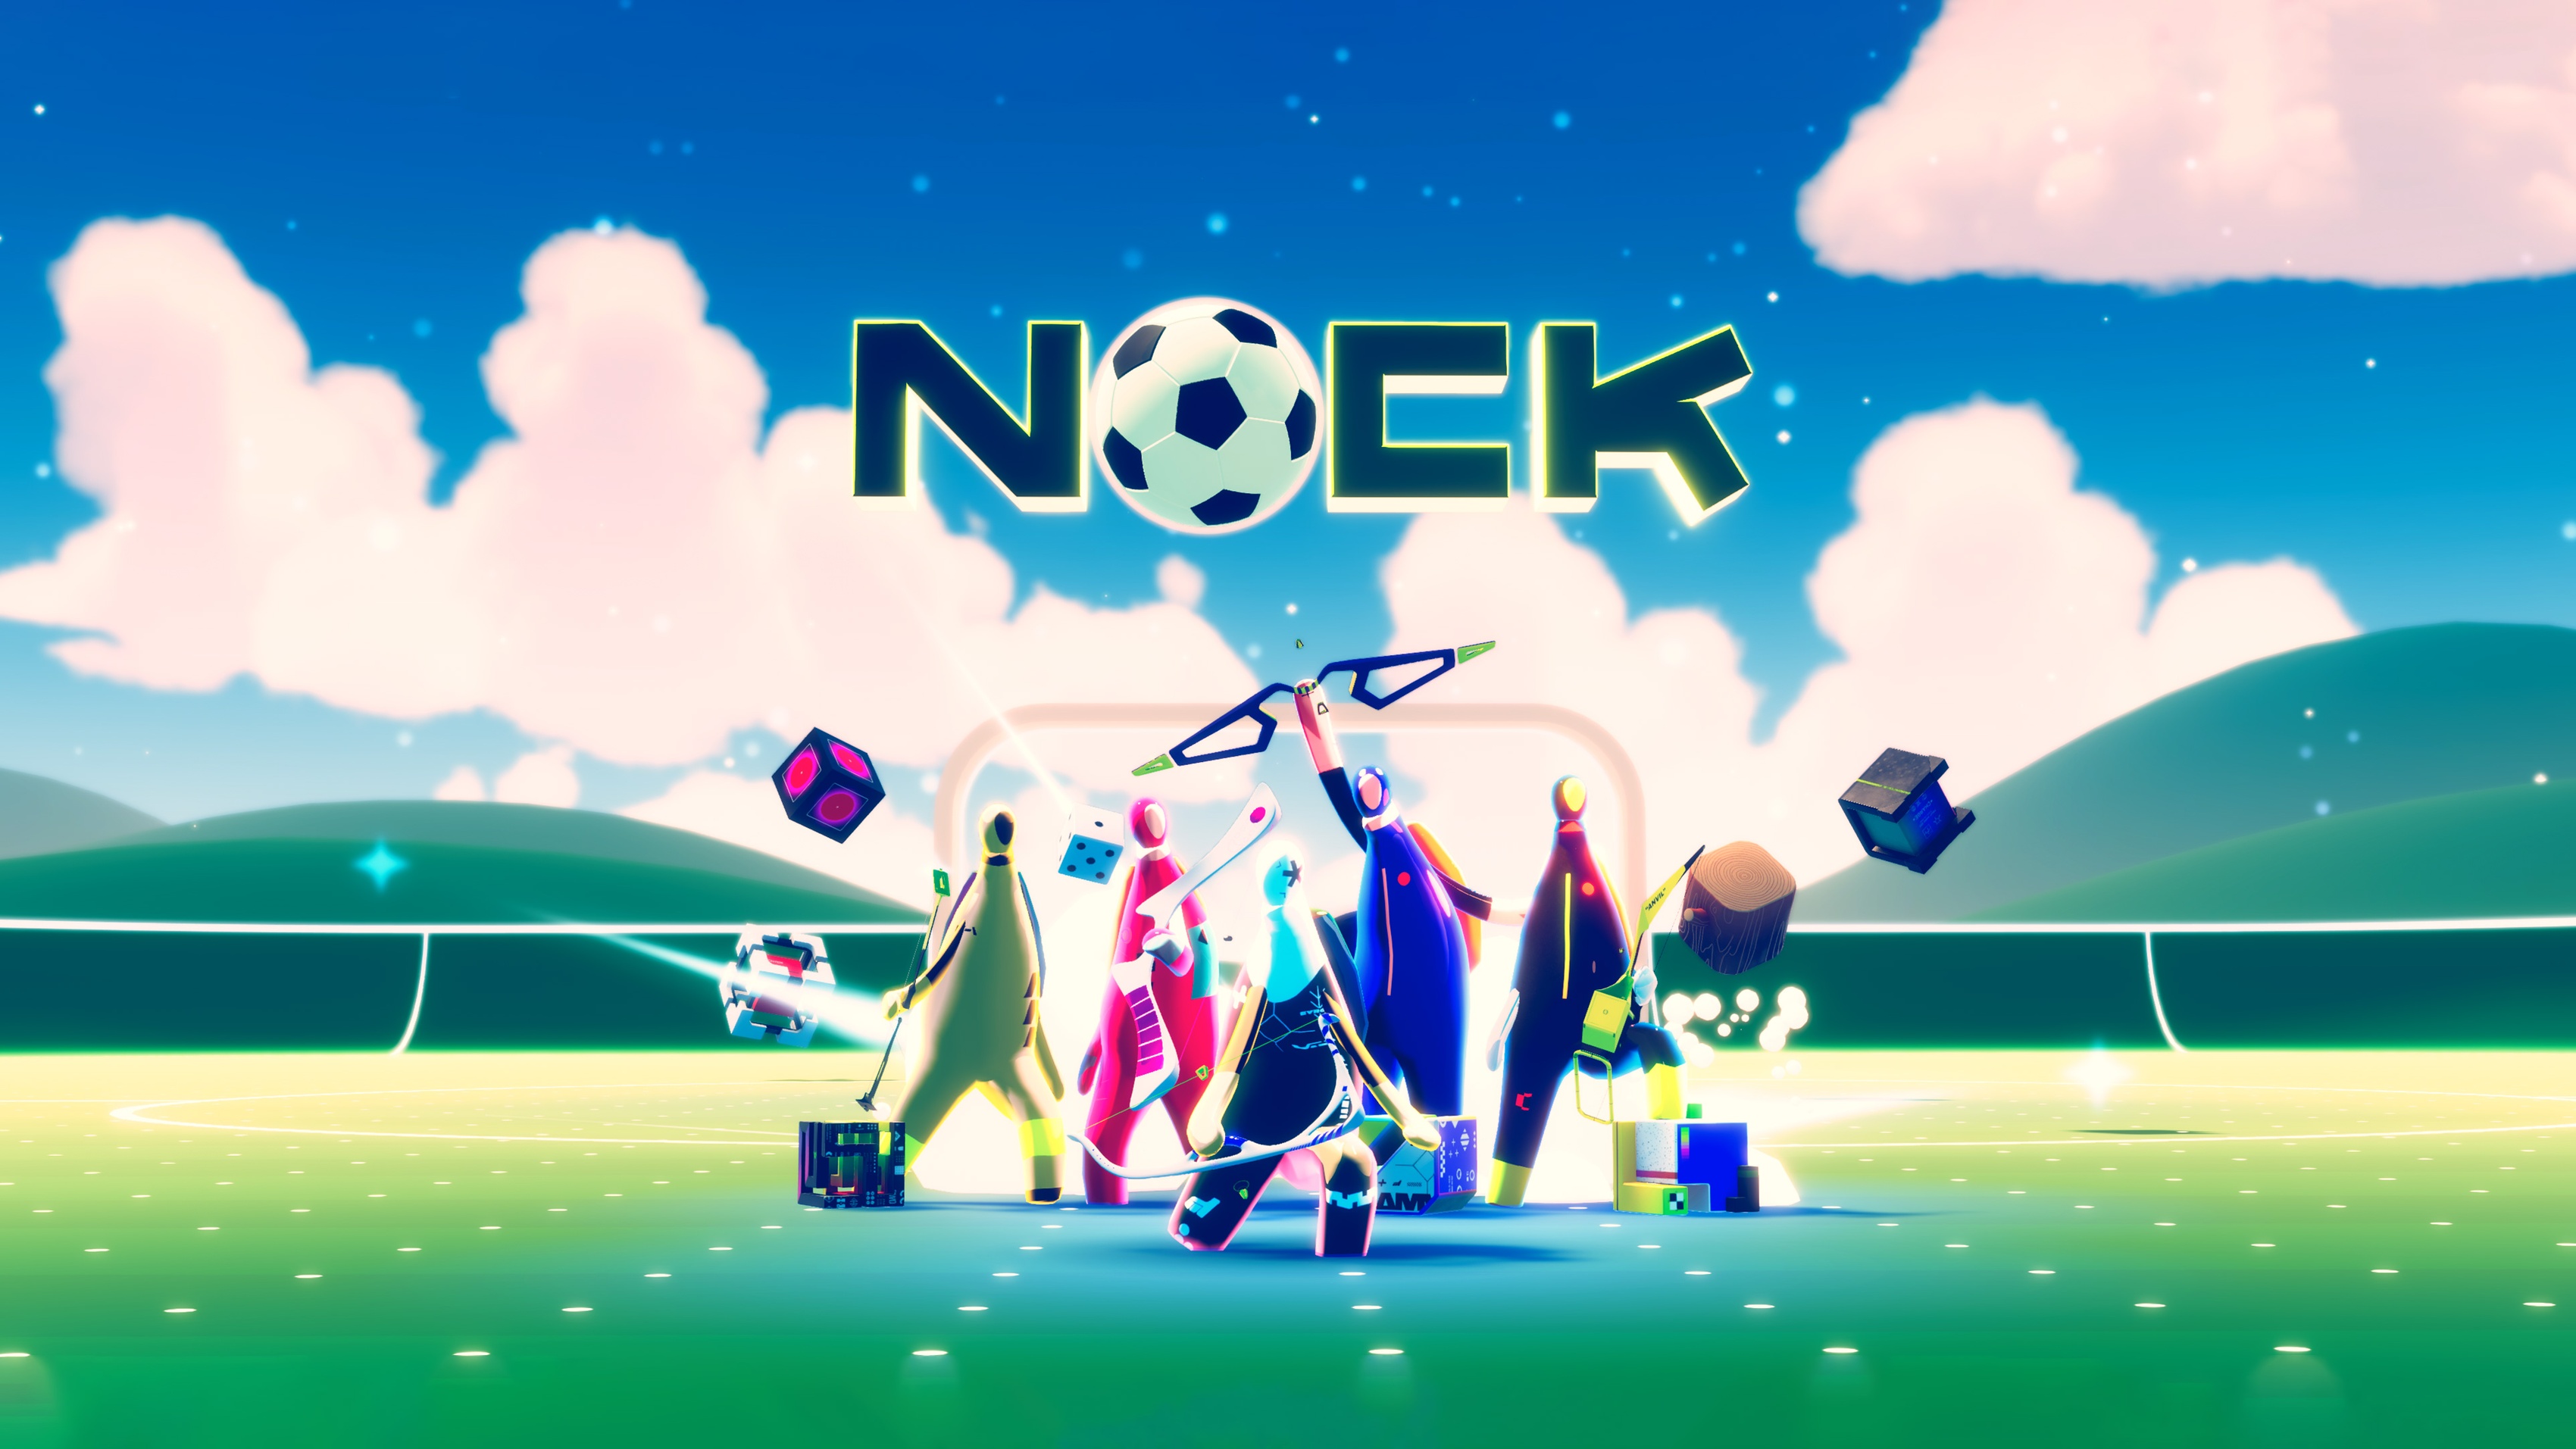 Nock hero image, players standing in VR